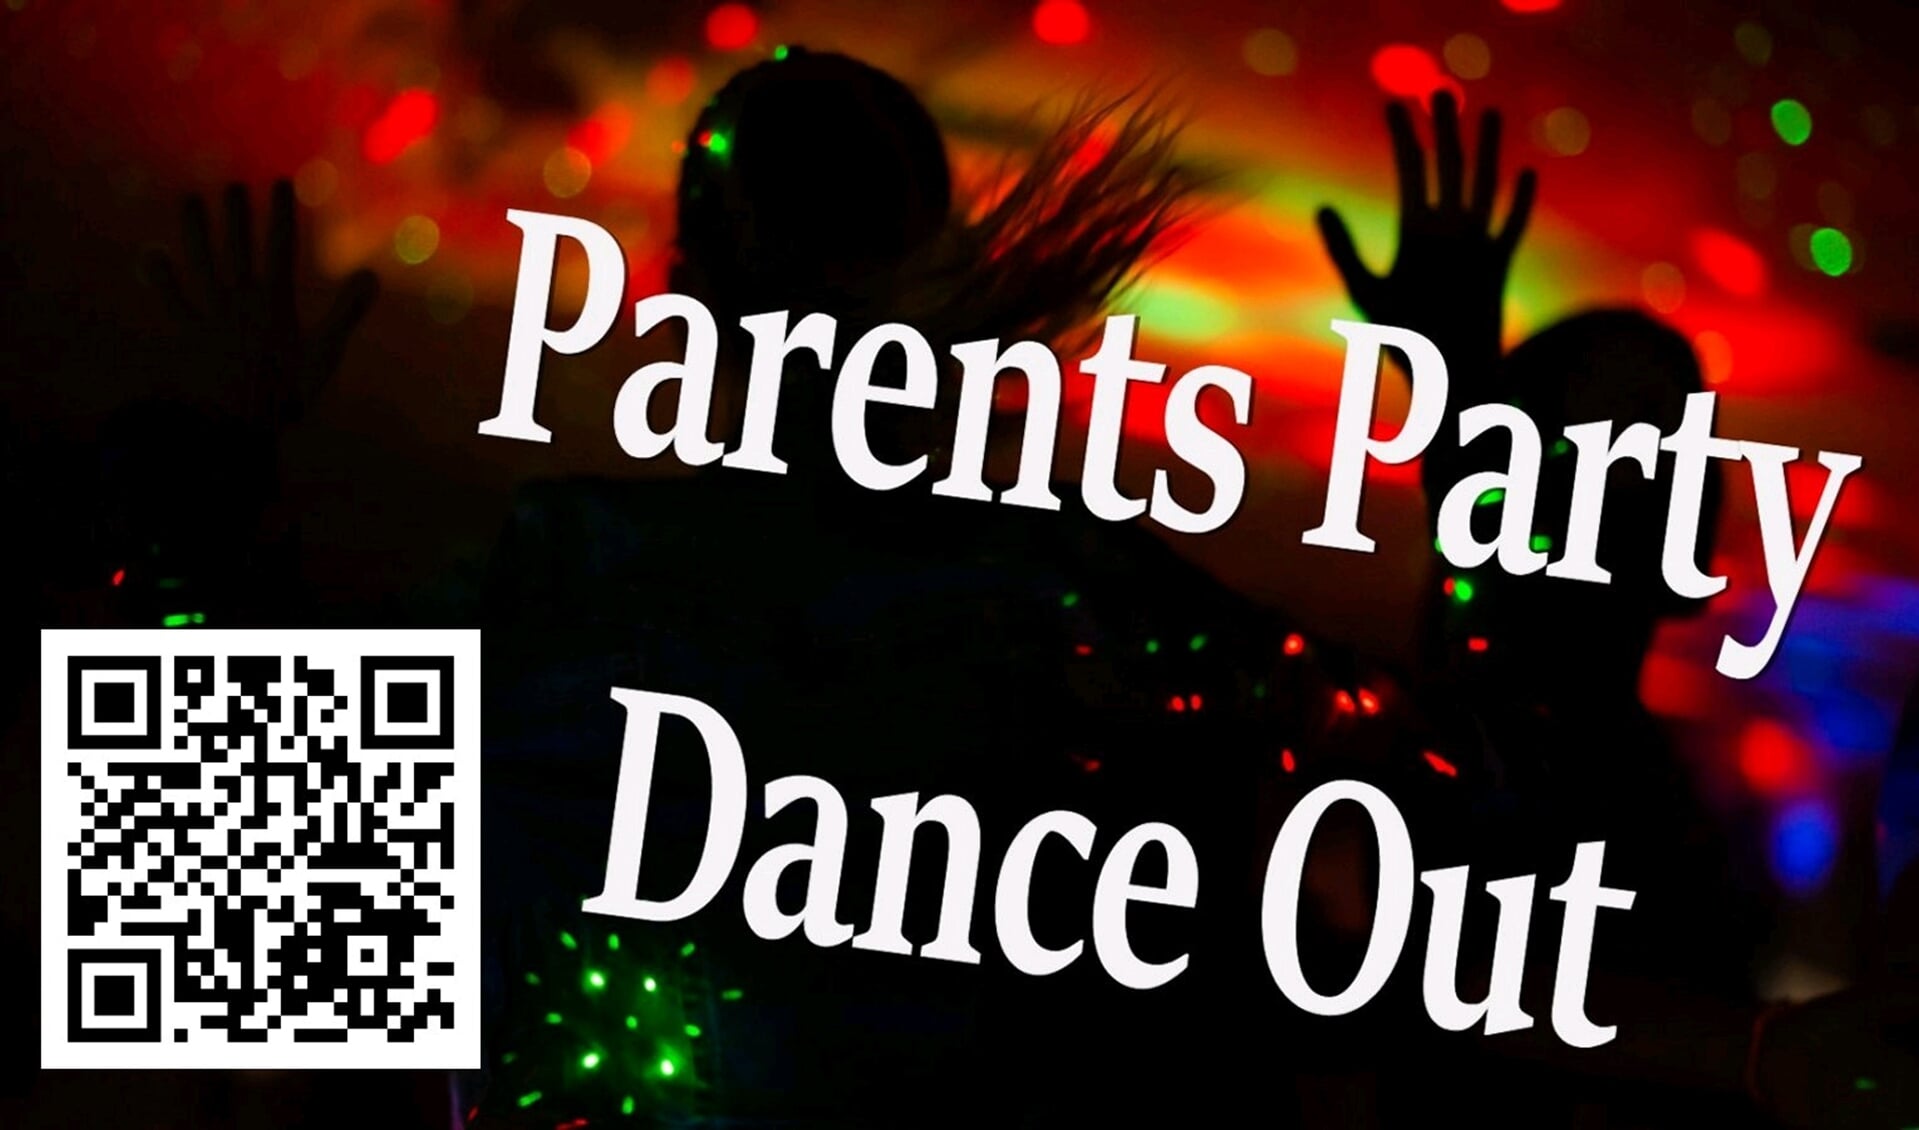 Feestende mensen tijdens 'Parents Party Dance Out'.